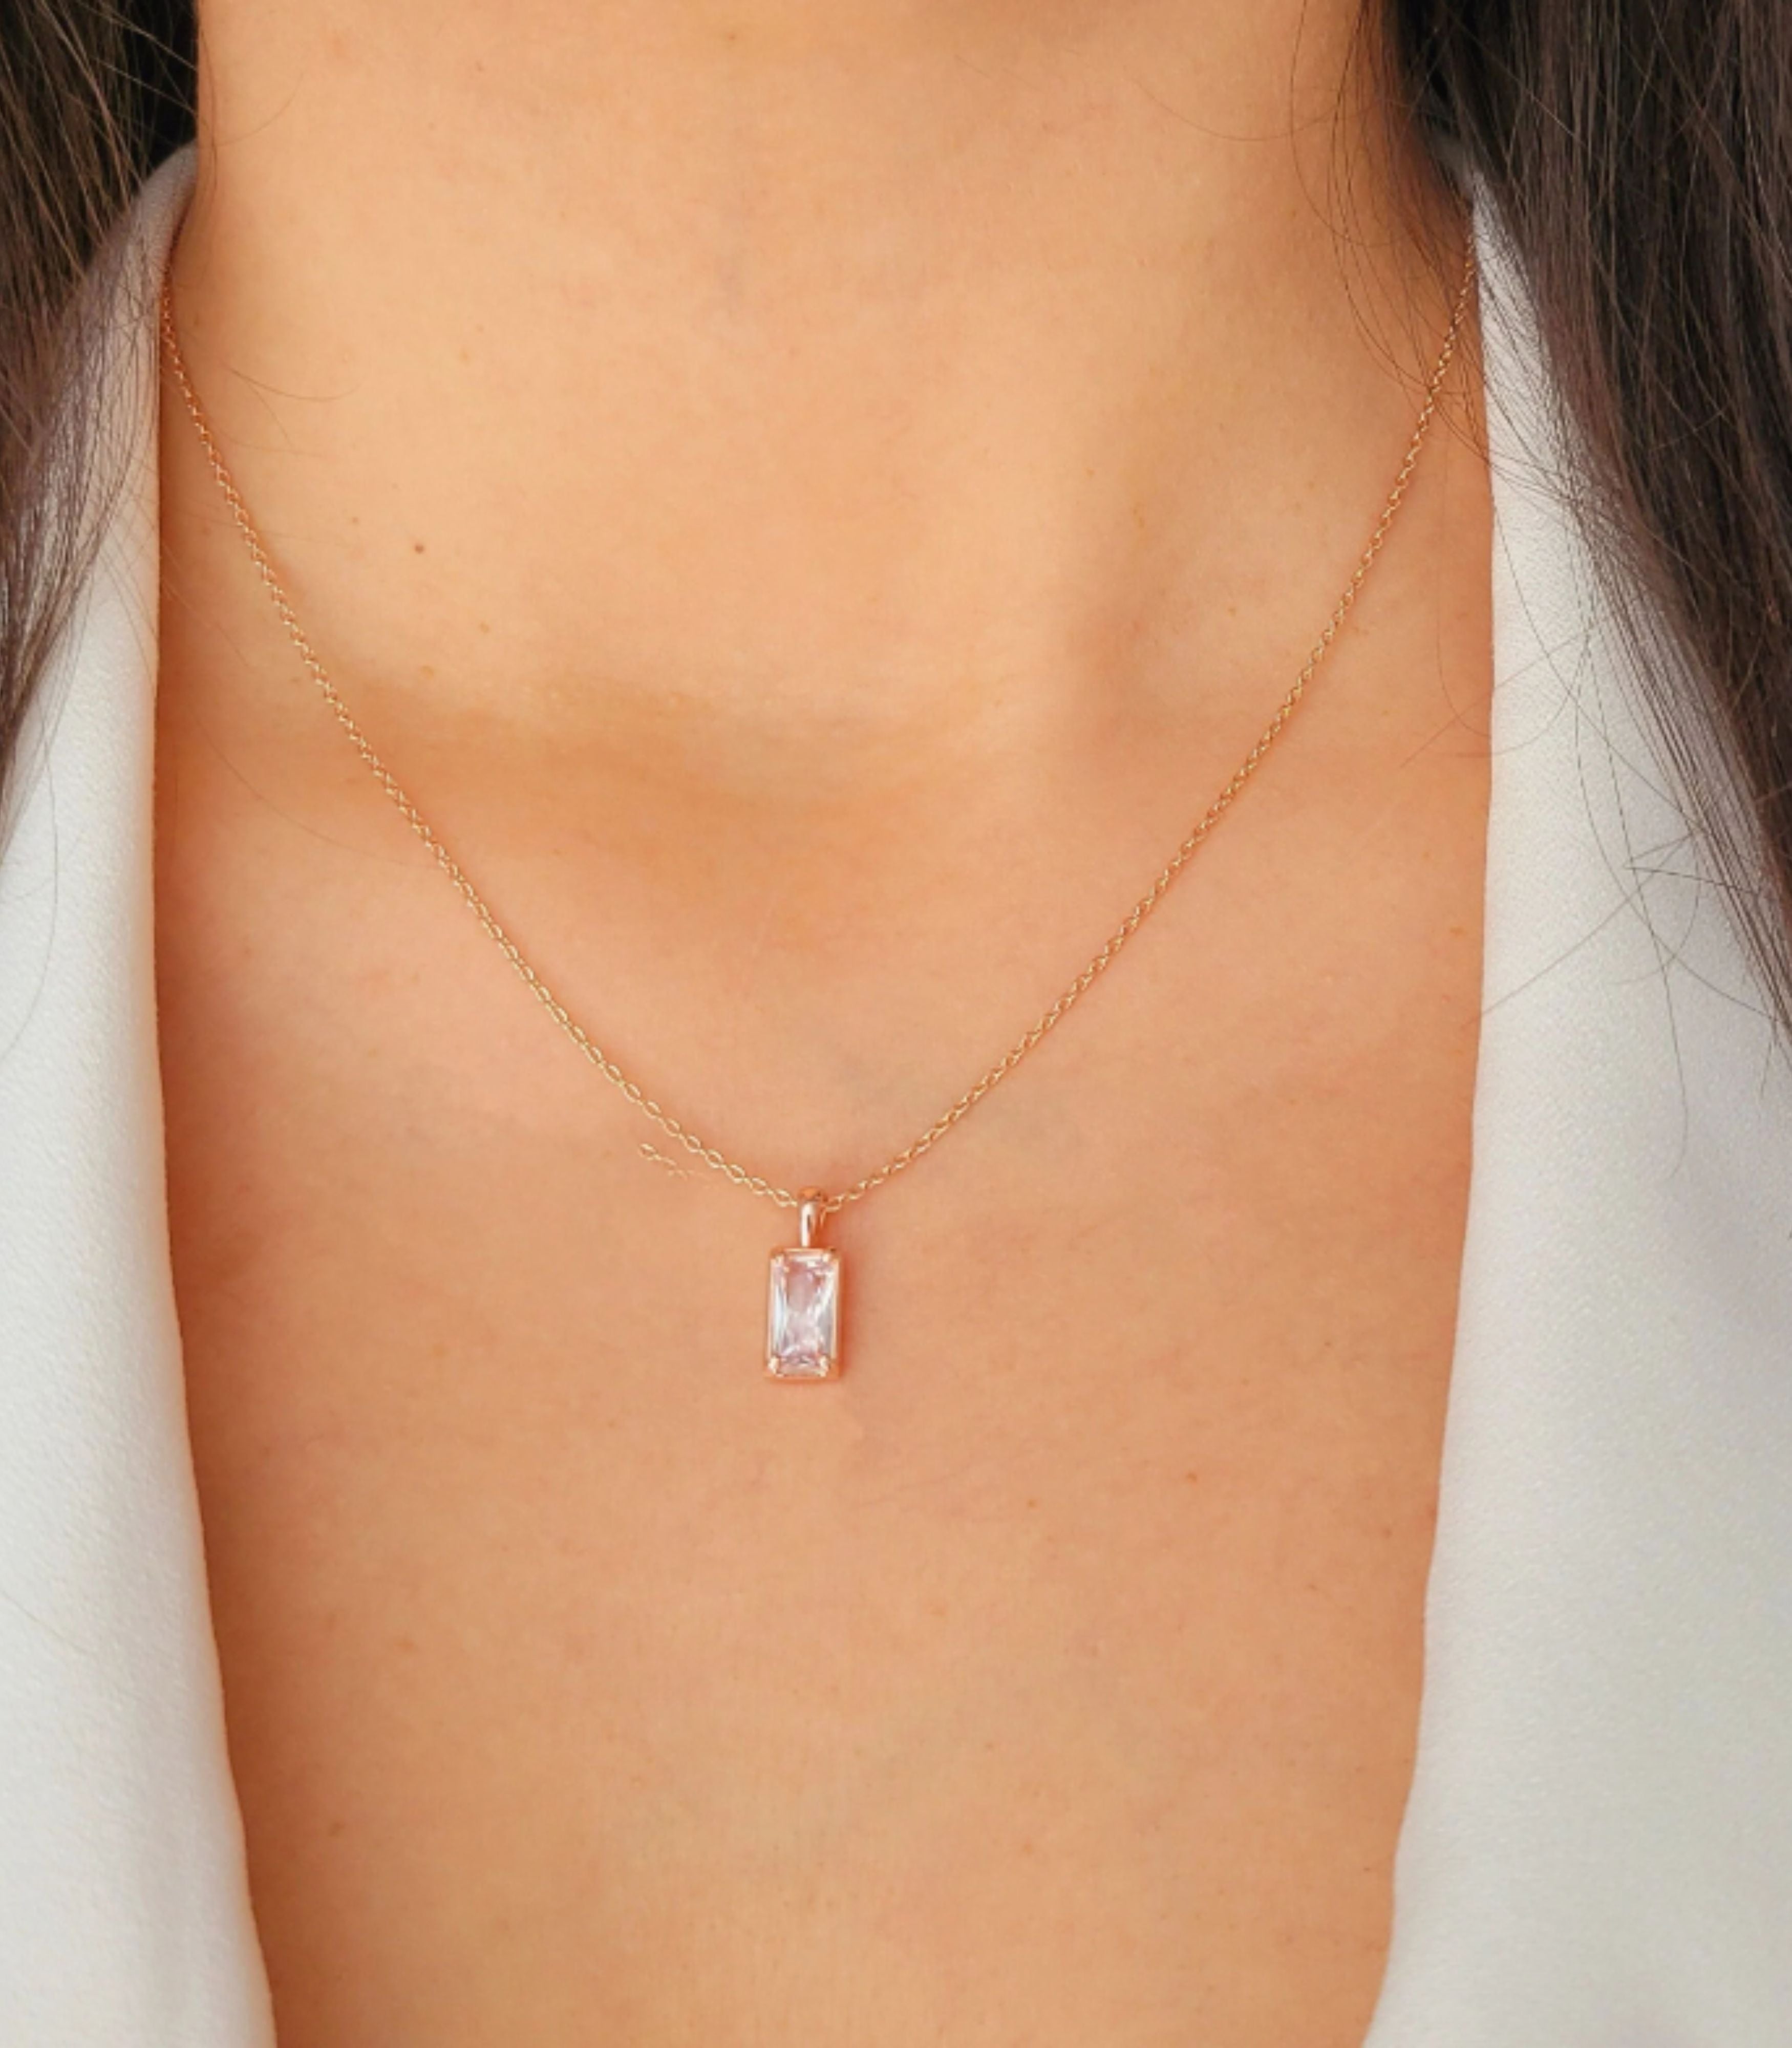 The rose wildspark gemstone necklace